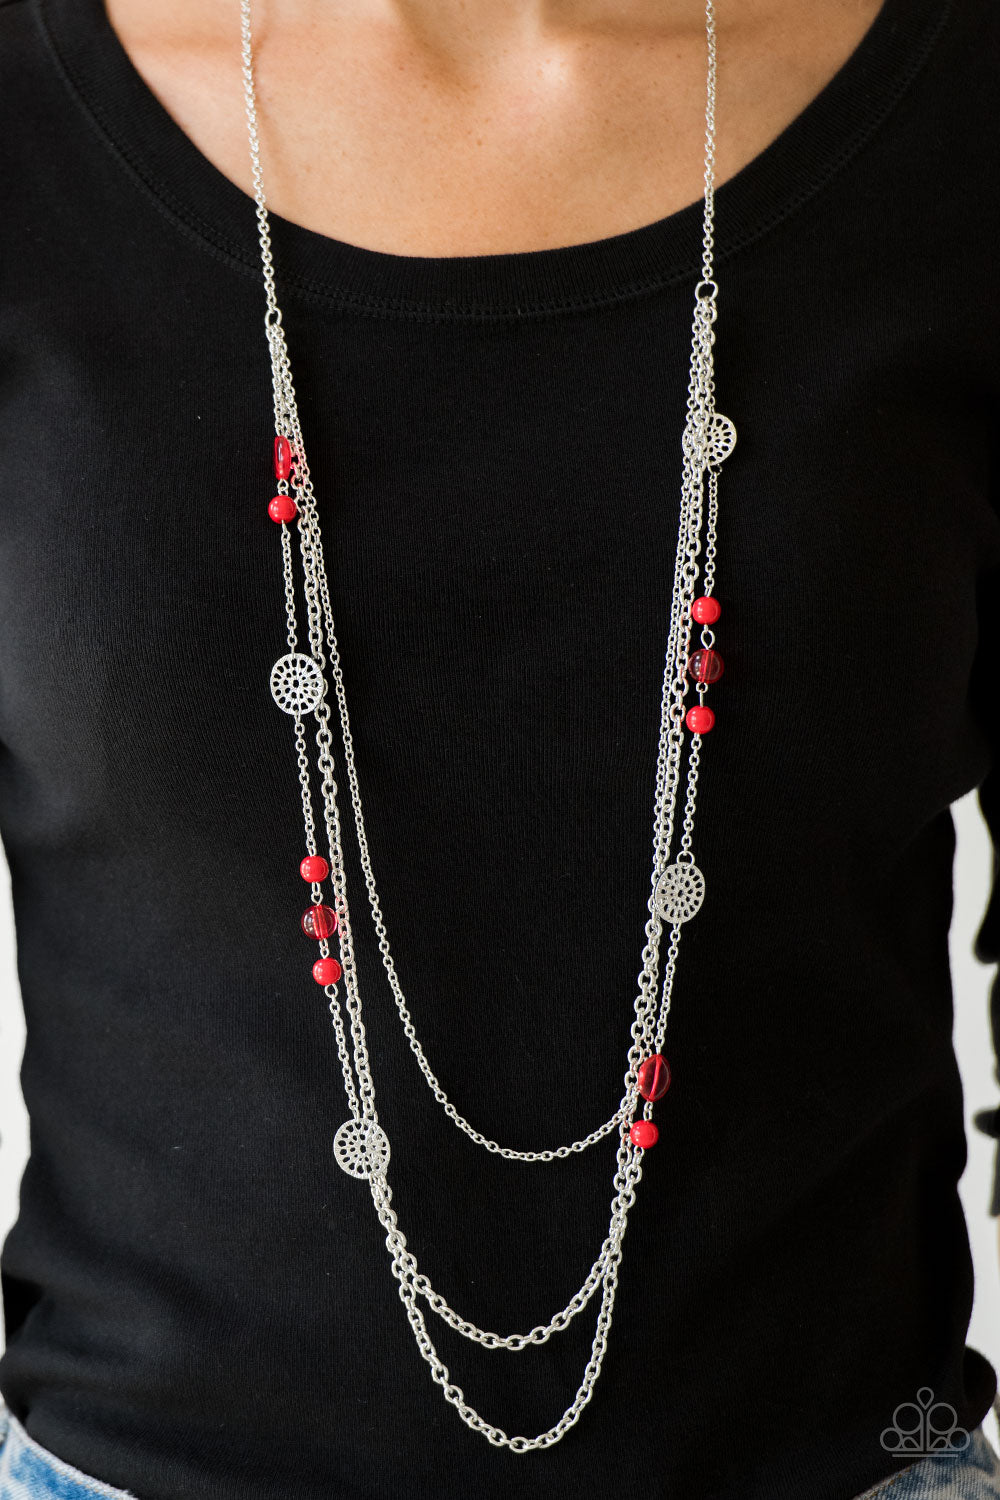 Paparazzi necklace - Pretty Pop-tastic! - Red